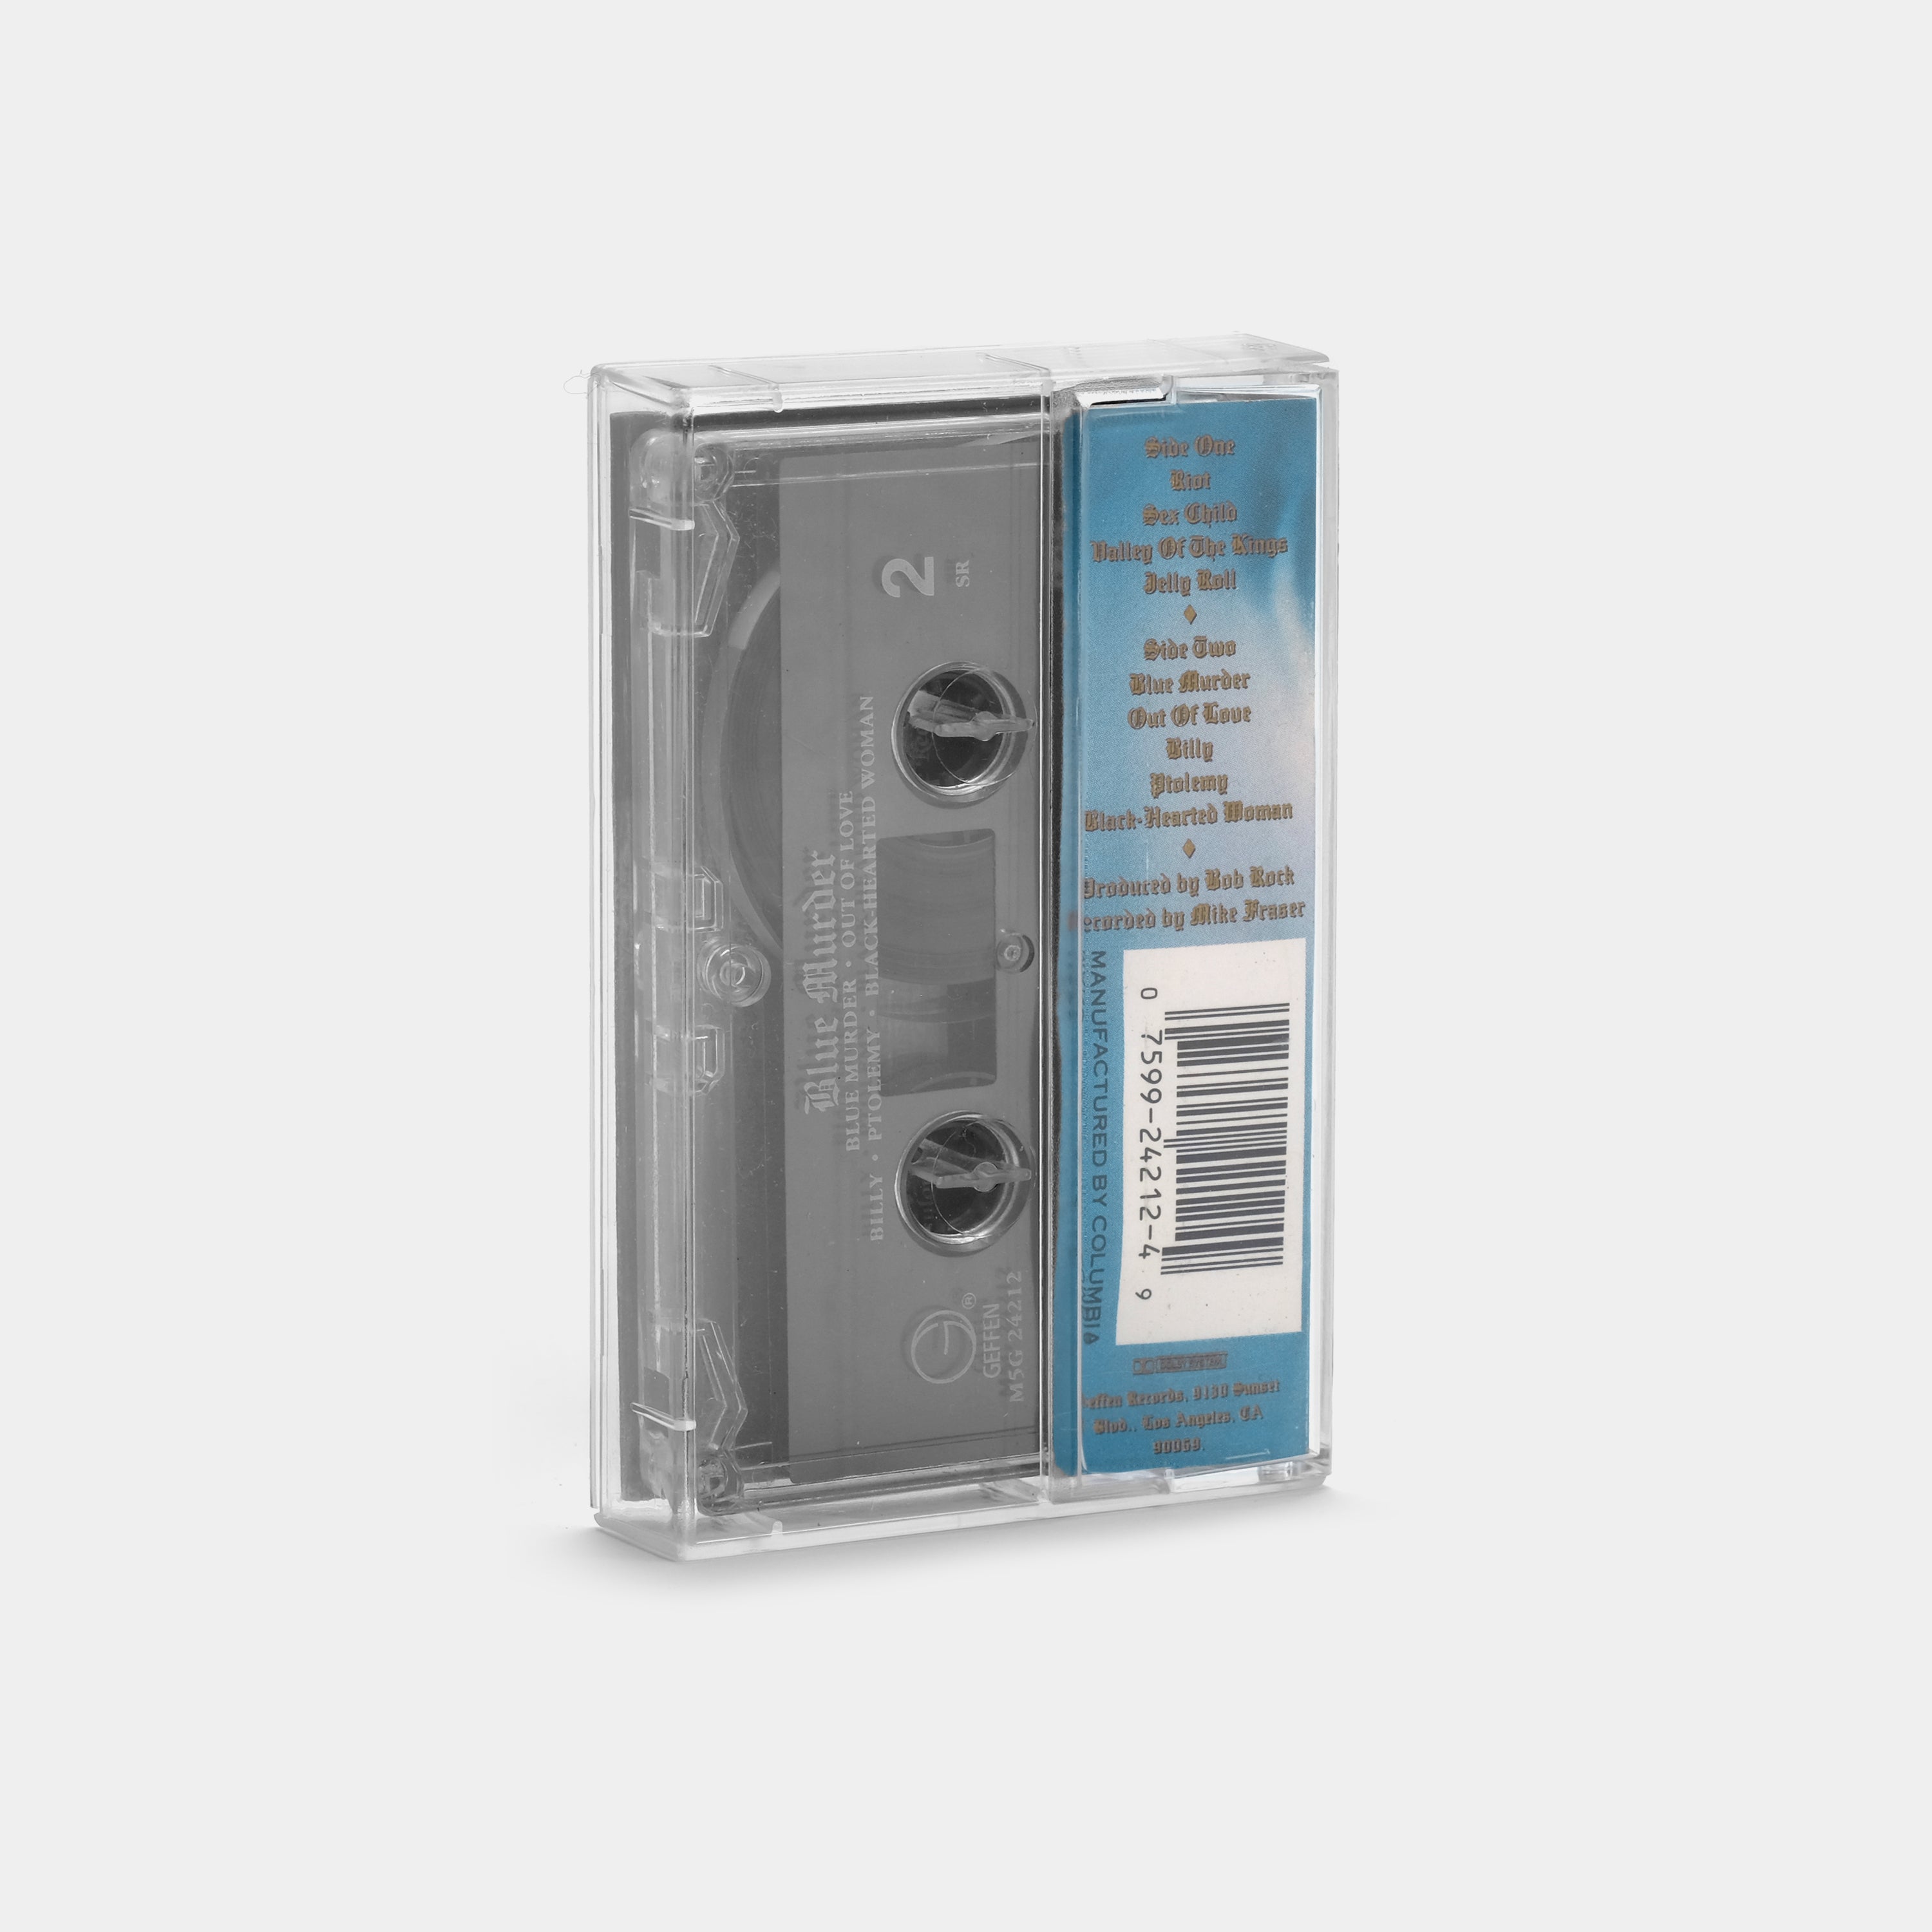 Blue Murder - Blue Murder Cassette Tape